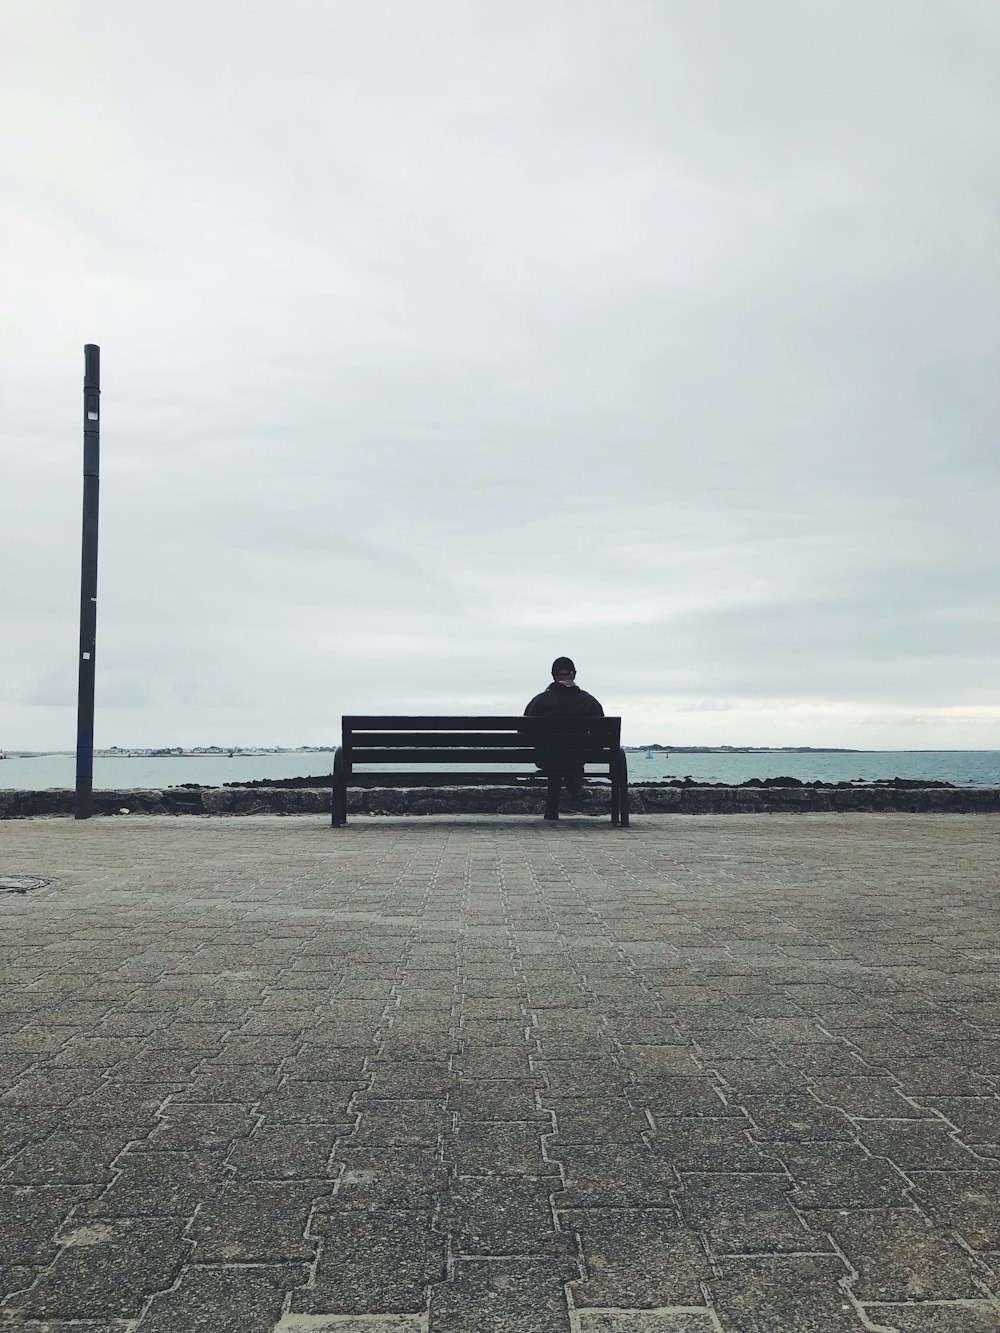 a man sitting on a bench near the ocean